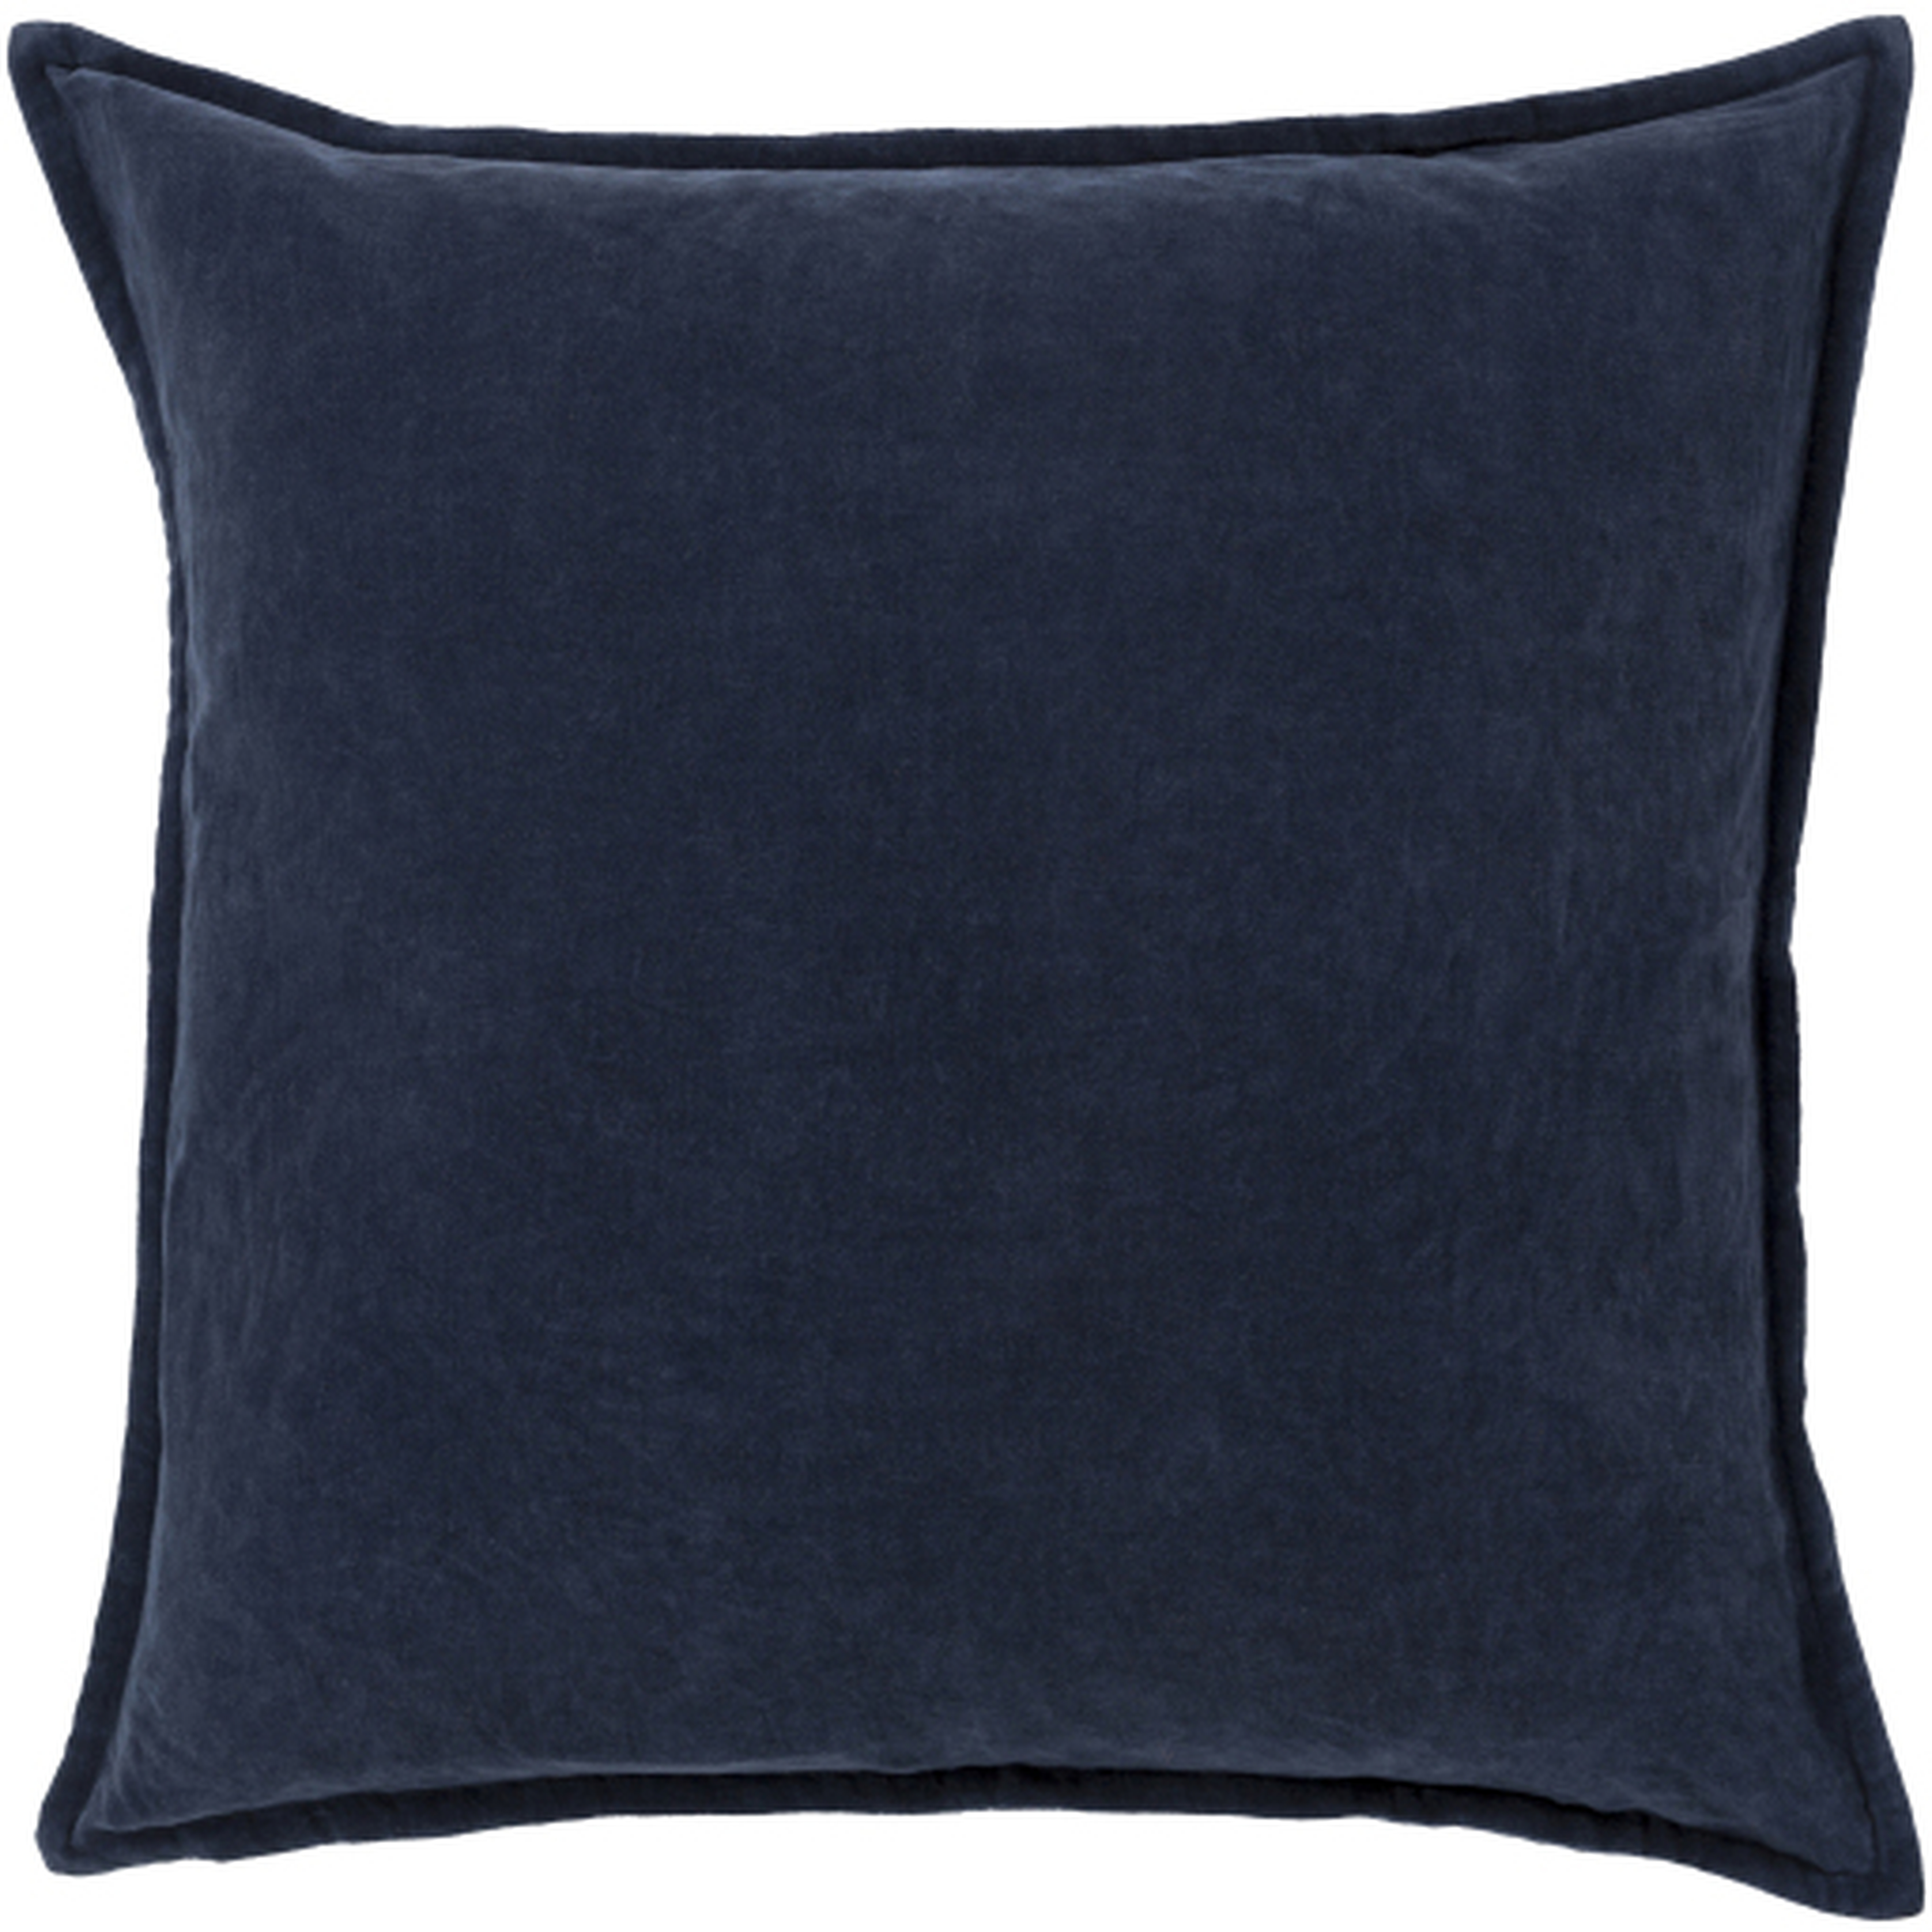 Cotton Velvet Throw Pillow, 22" x 22", with down insert - Surya